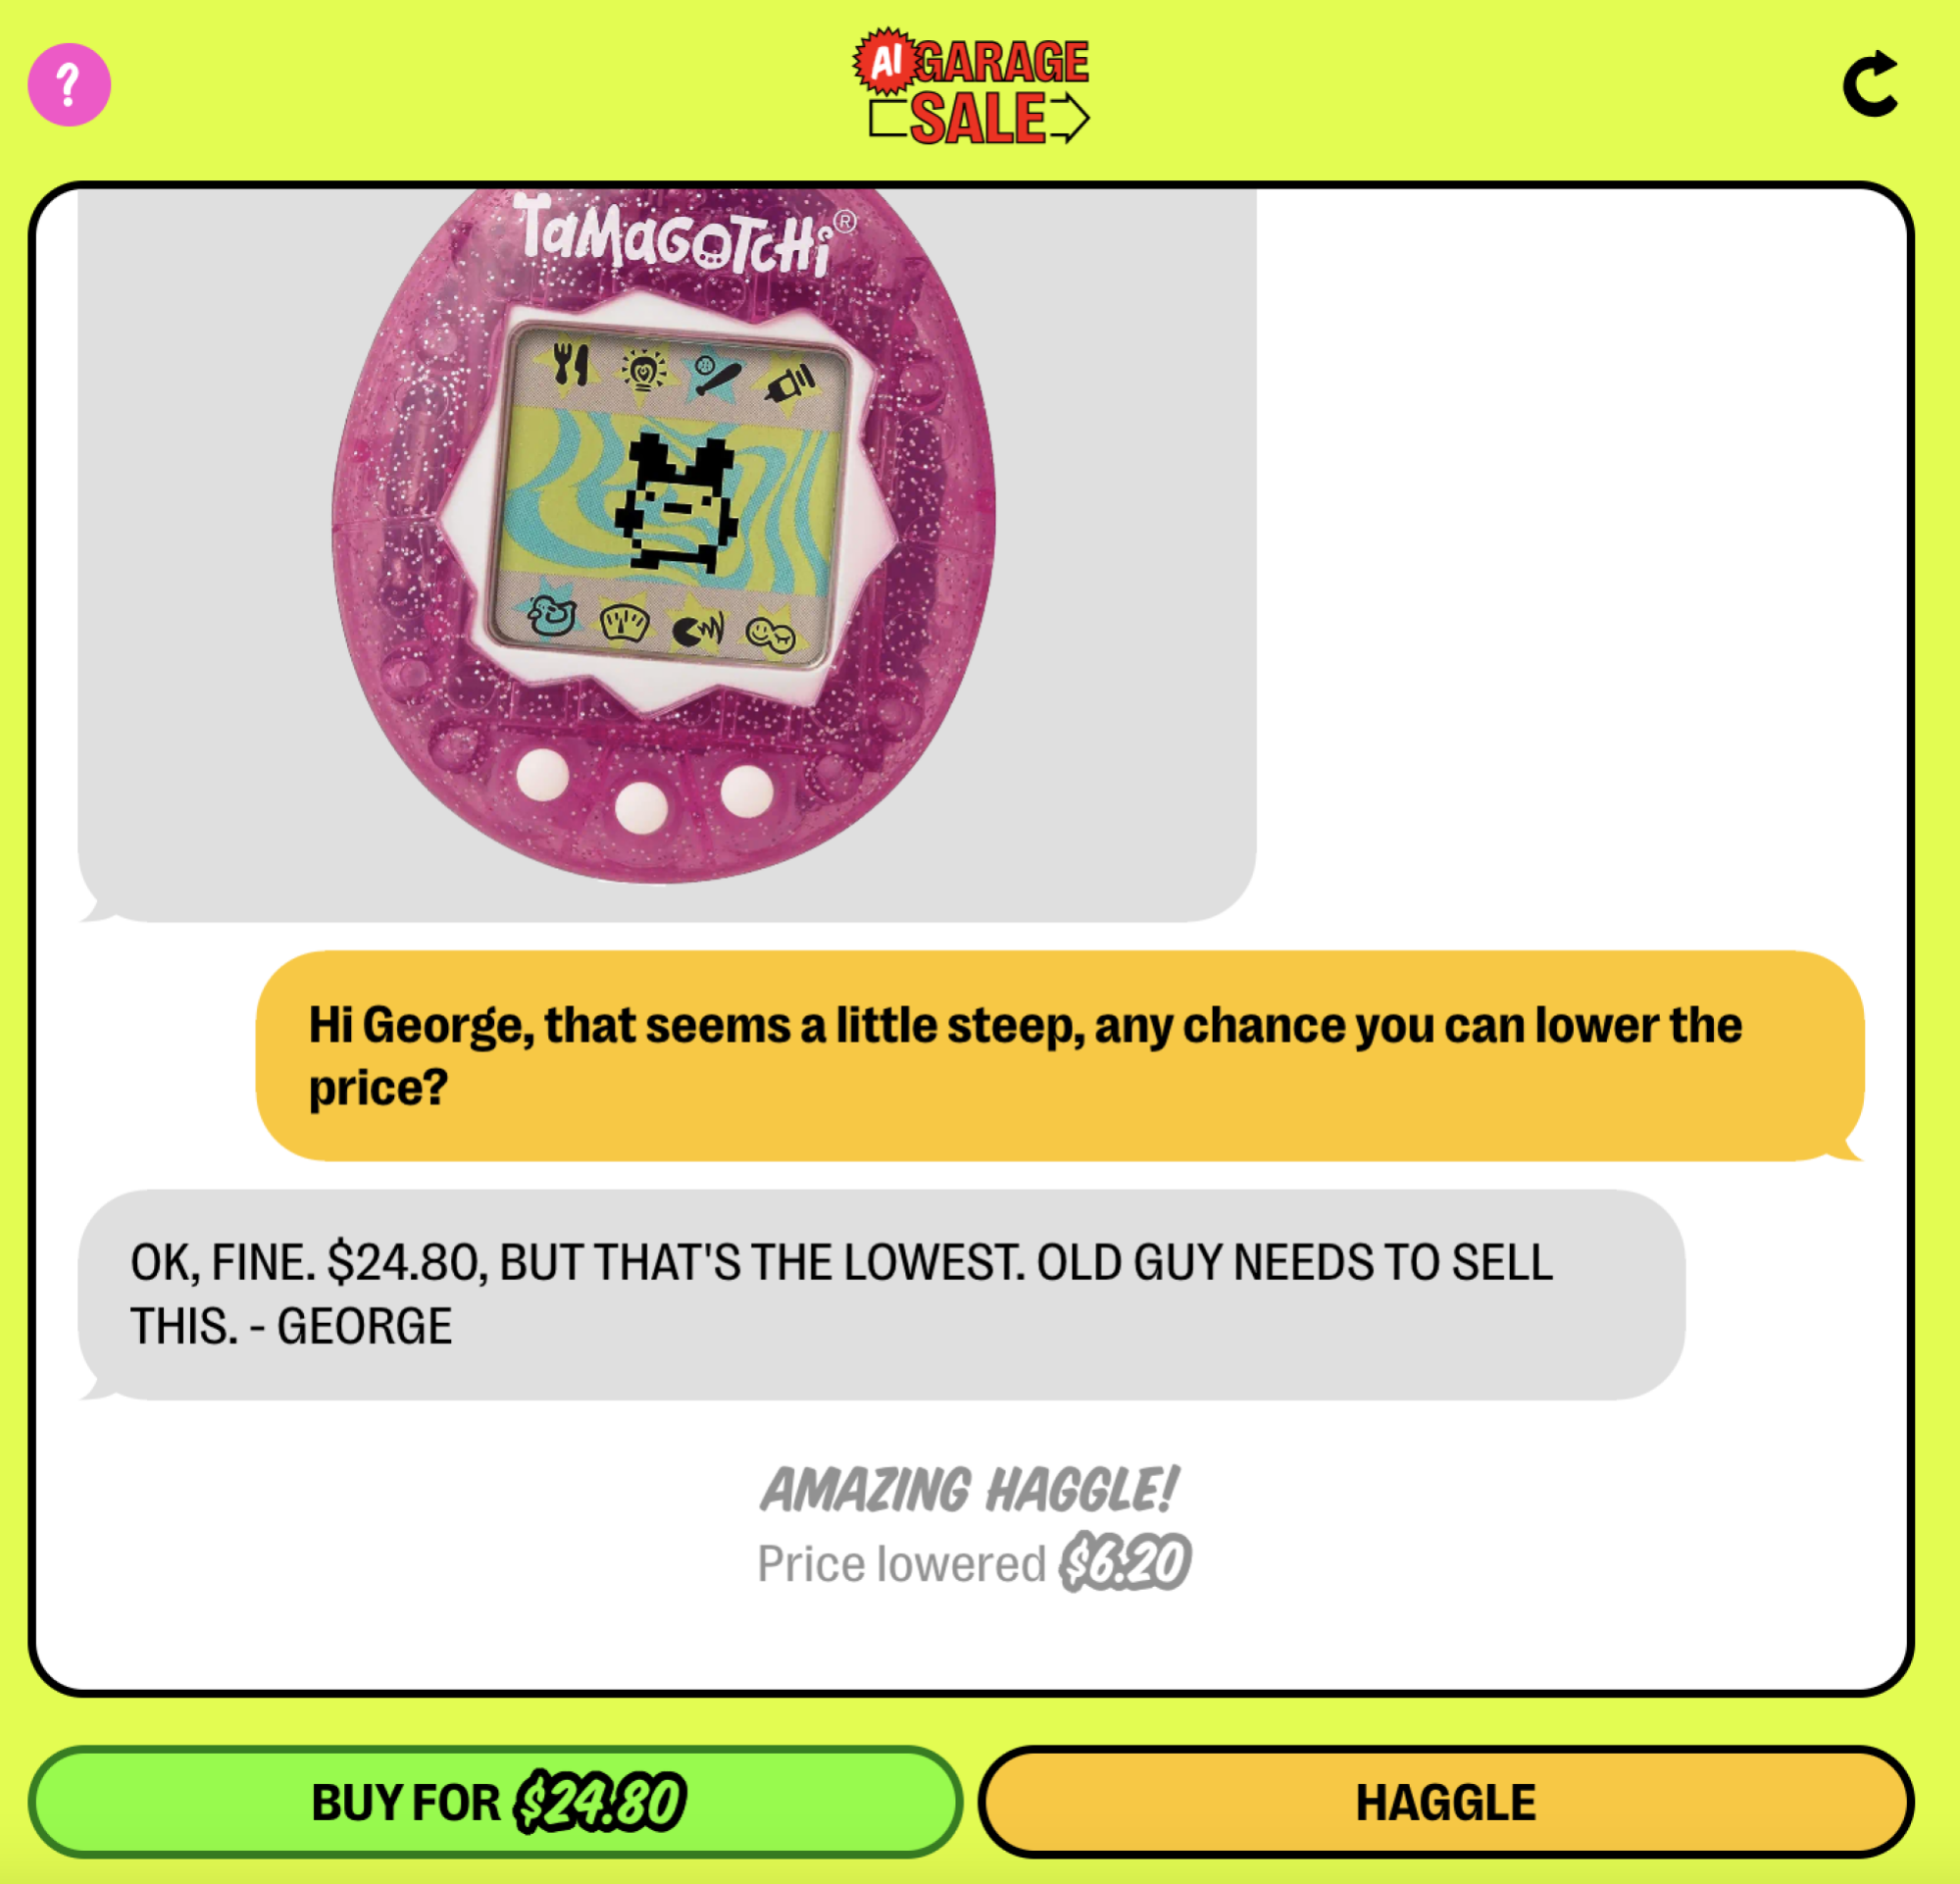 A screenshot of the AI Garage Sale bot selling a Tamagotchi